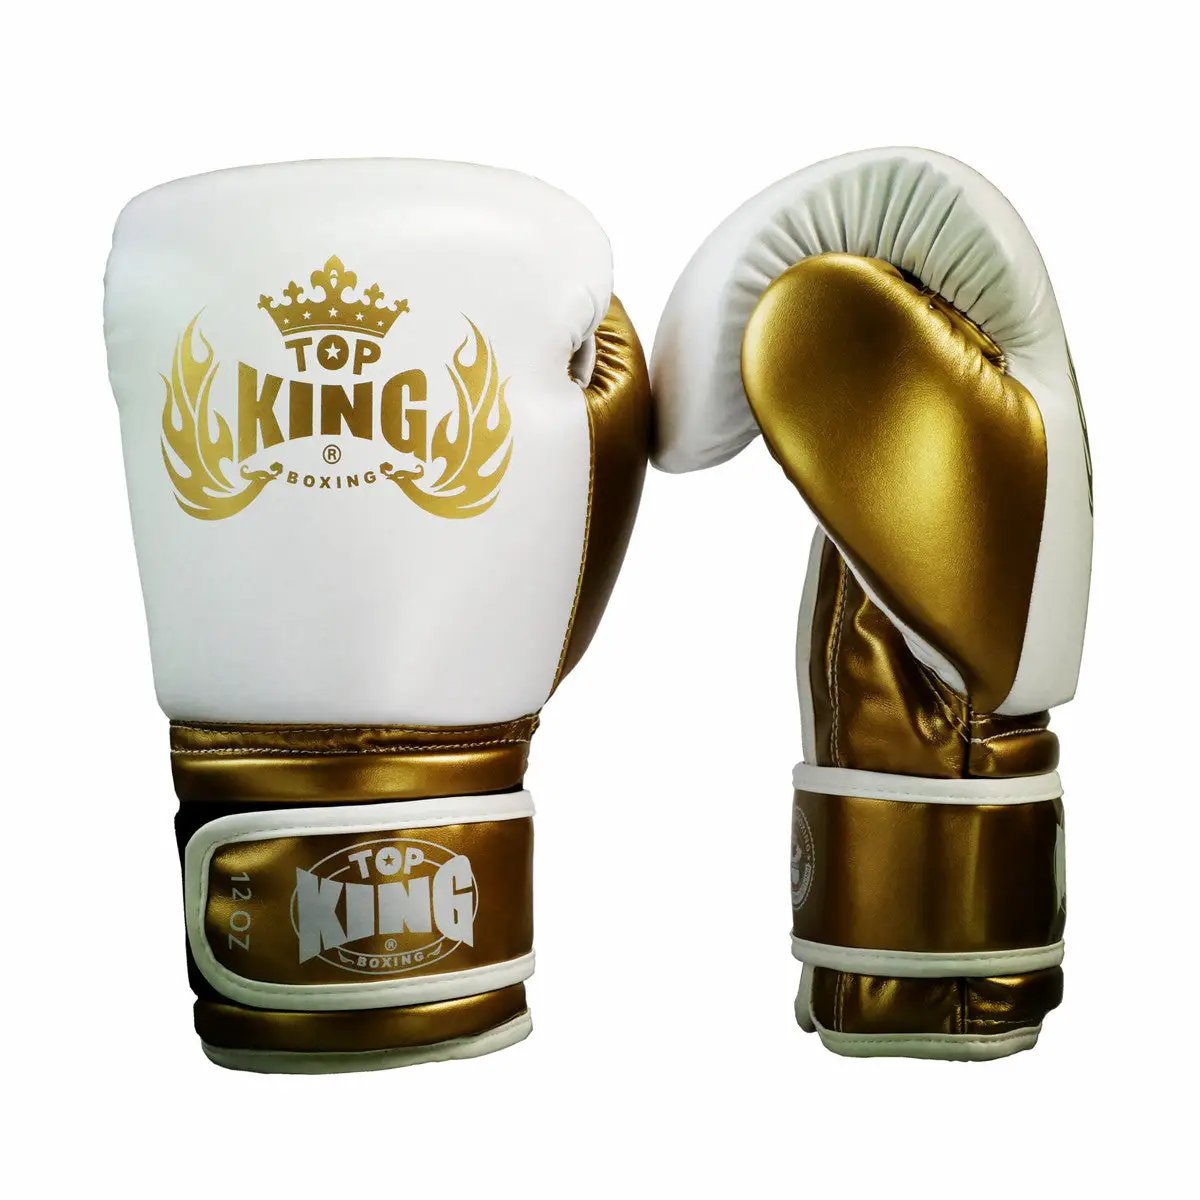 WILKYs0Boxing glove Sanda Combat trainingFabric: PU fabric
Size: 8, 10, 12, 14 (oz)
Uses: boxing training, fighting

 
 


 
 
 
 
 
 
 
 
 size：cm
 height
 width
 Weight
 
 
 8OZ
 26.8
 13.2
 35-50kg
 
 
 